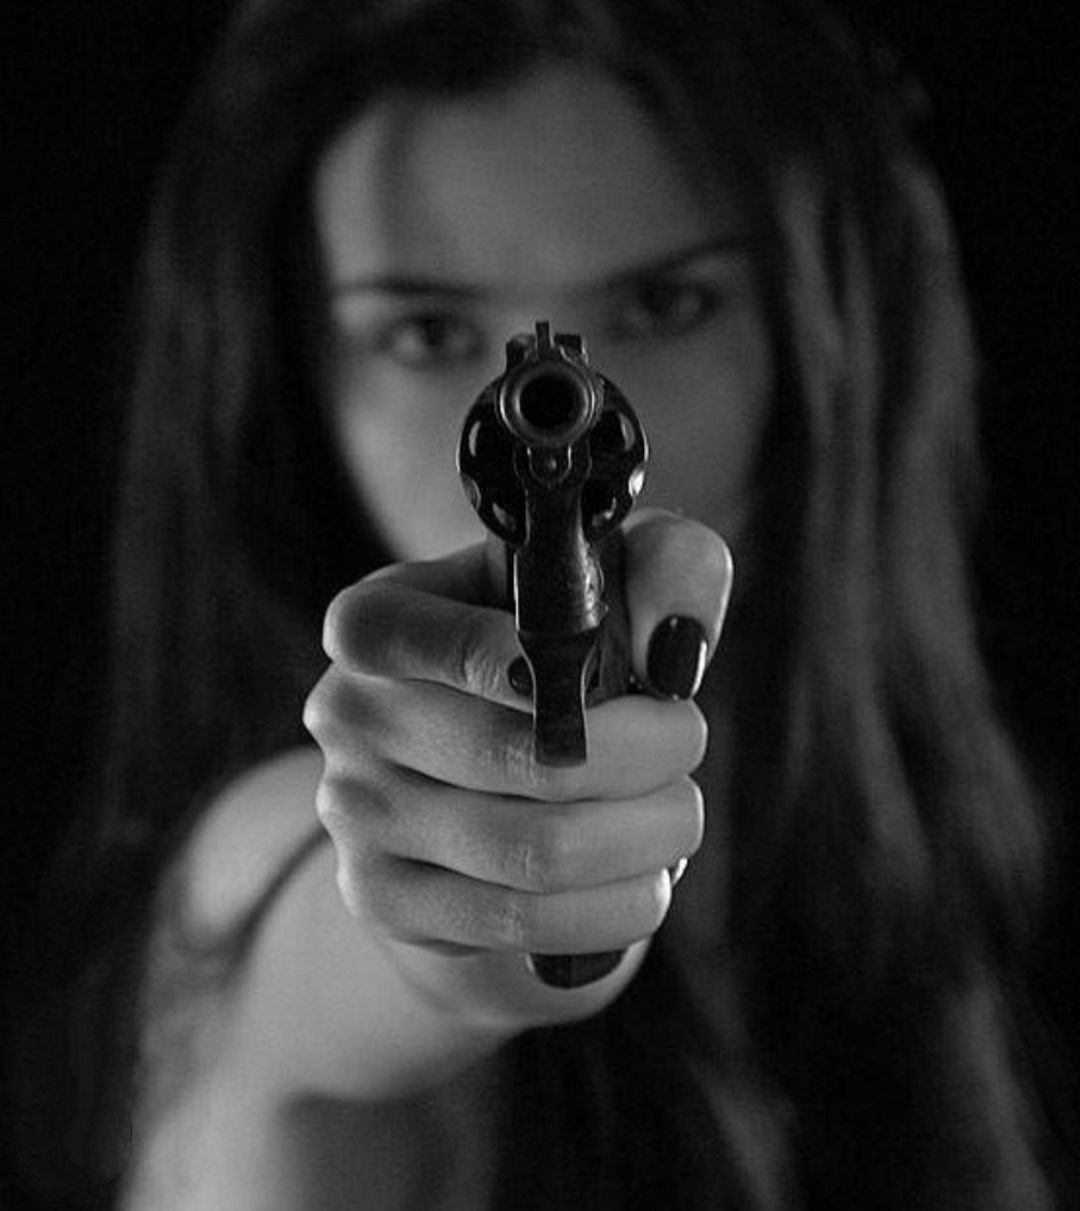 Аватарки с пистолетом. Женская рука с пистолетом. Девочка с пистолетом. Дуло пистолета. Девушка с пистолетом целится.